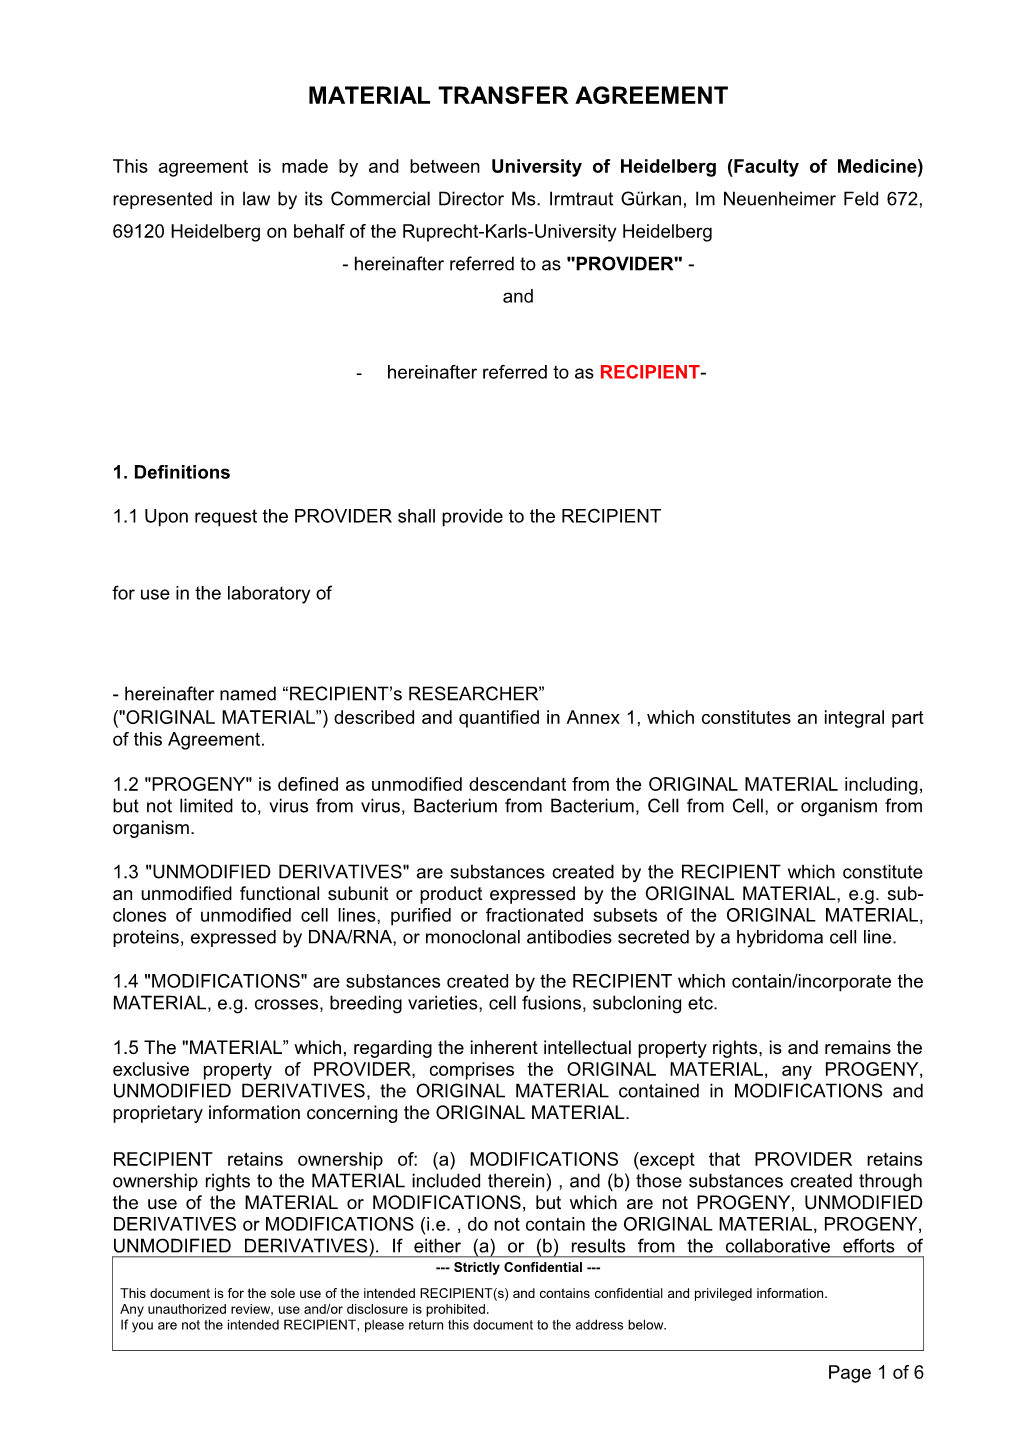 EMBL Standard Material Transfer Agreement